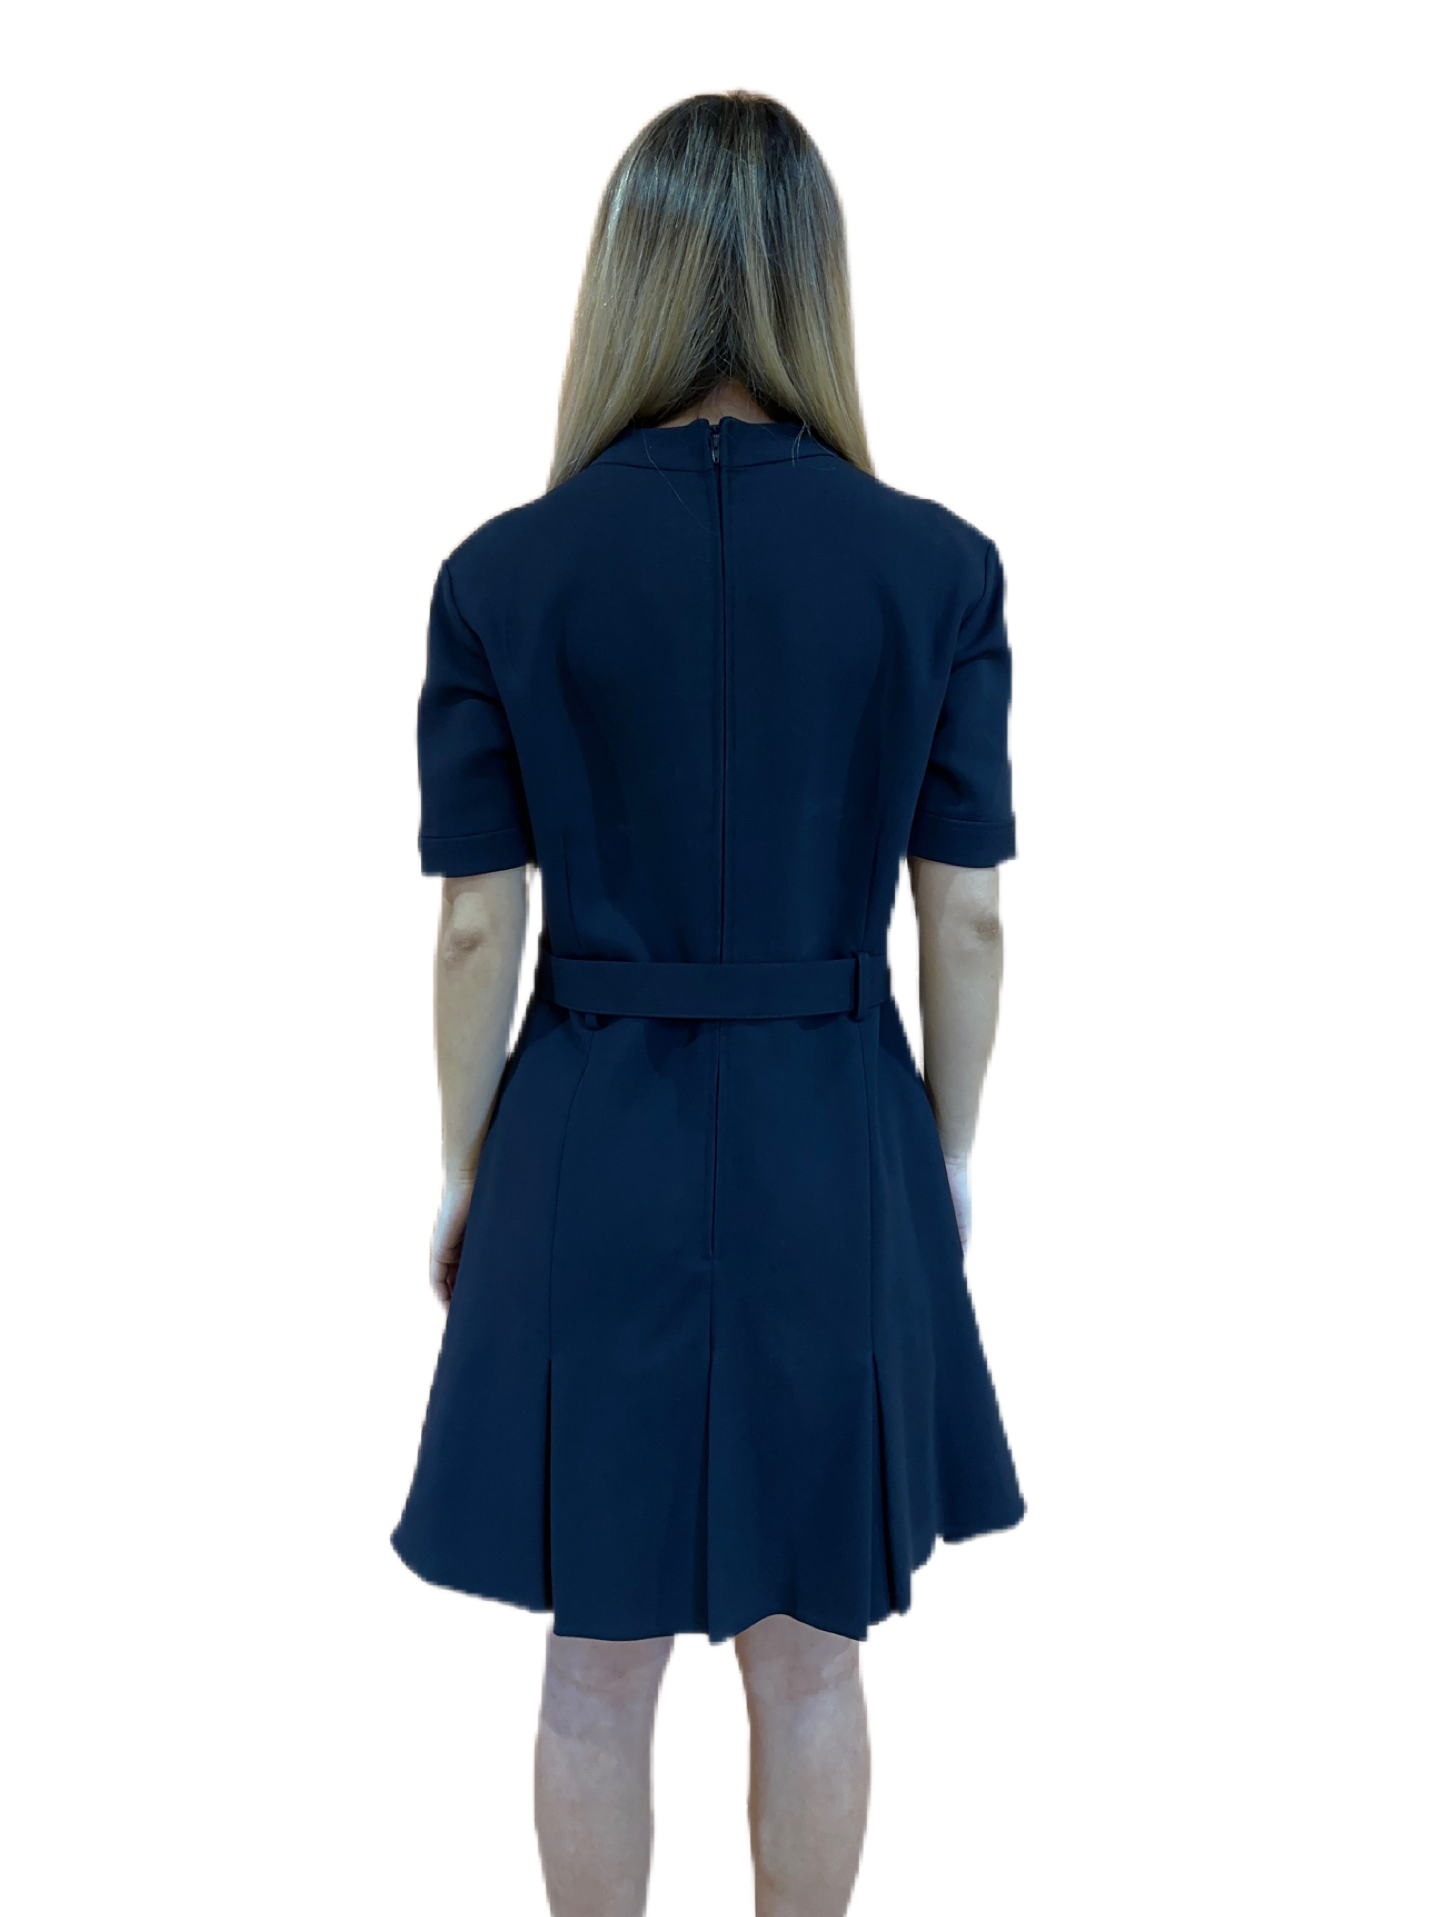 Scanlan Theodore Black Short-Sleeve Dress. Size: 12